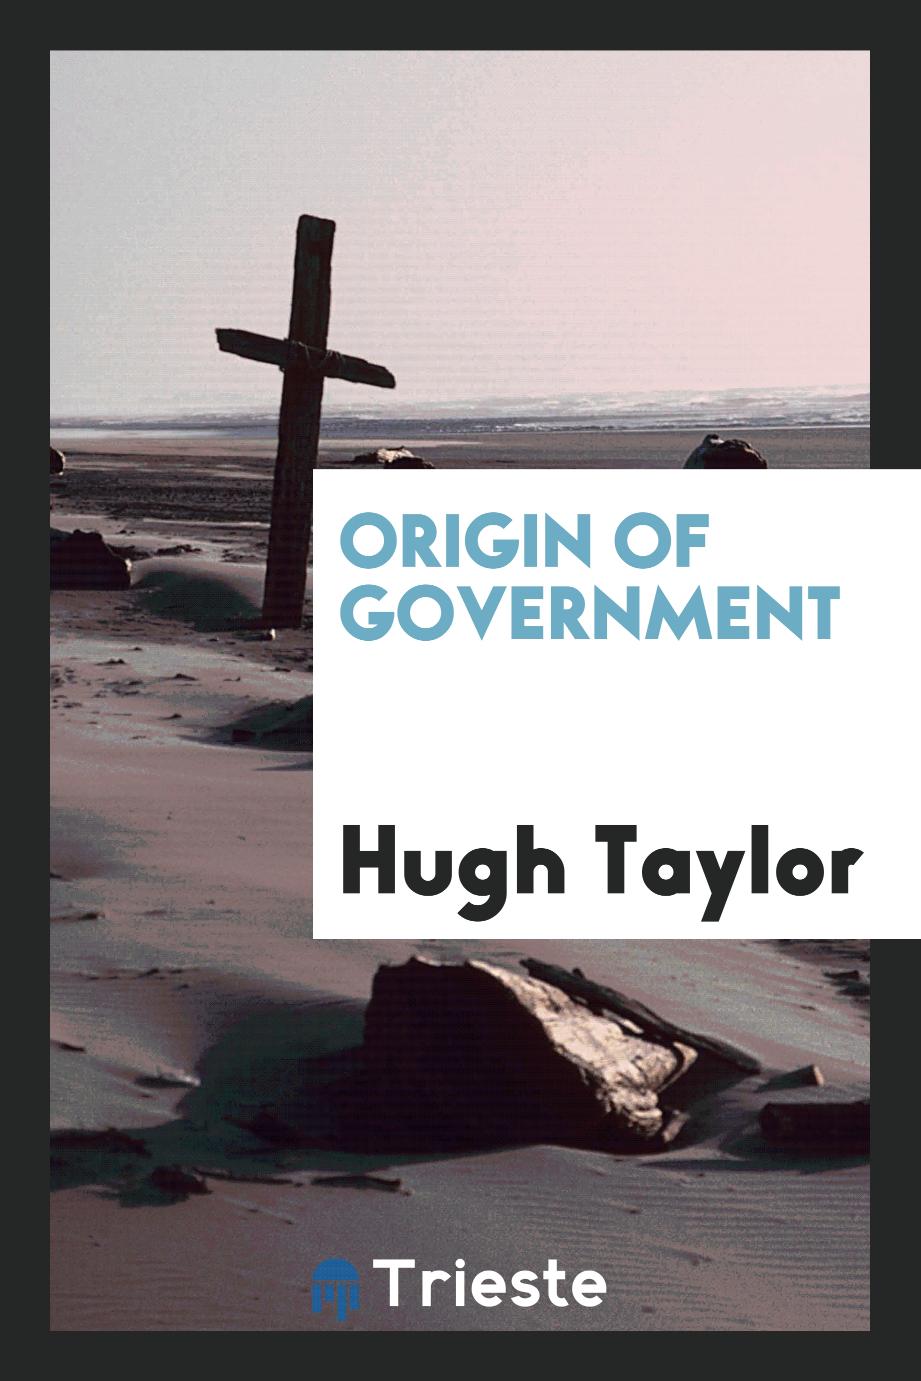 Origin of government